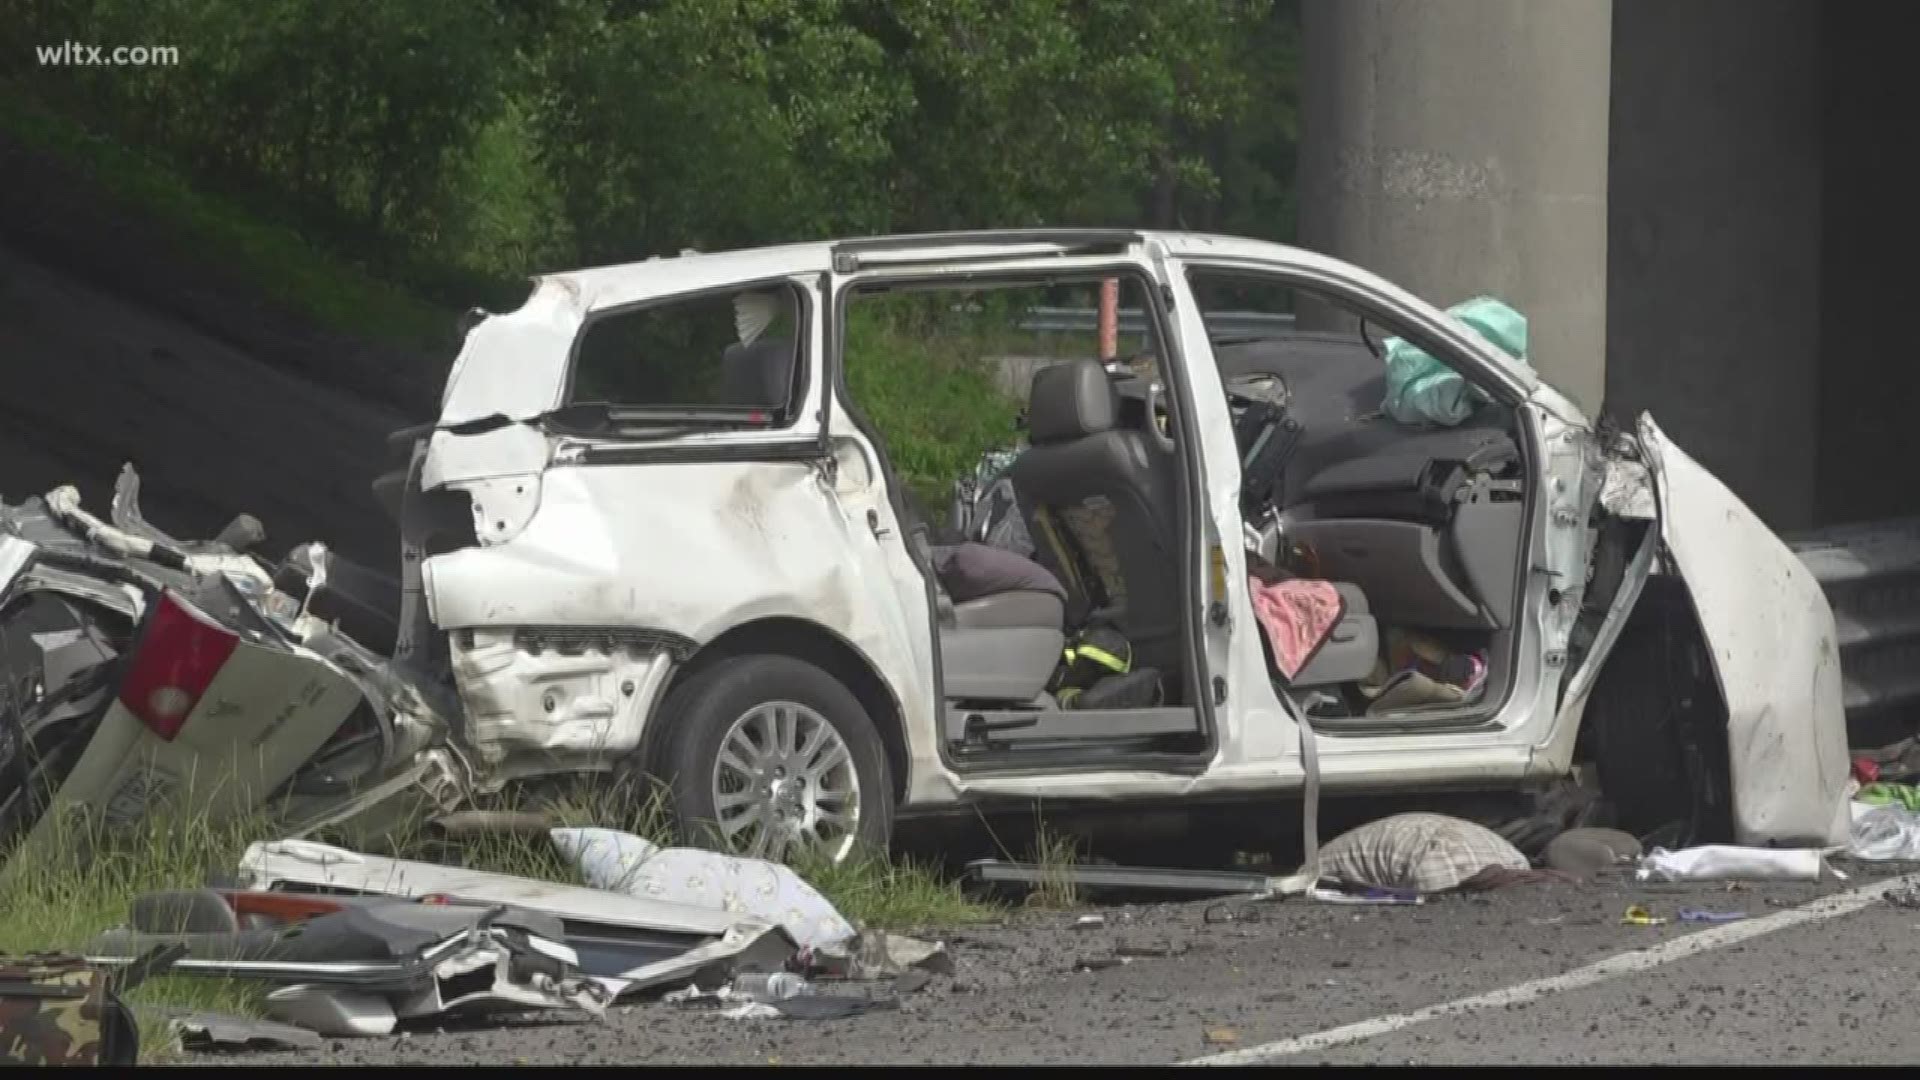 Fatal accident claims 3 lives on I-26 in Orangeburg | wltx.com